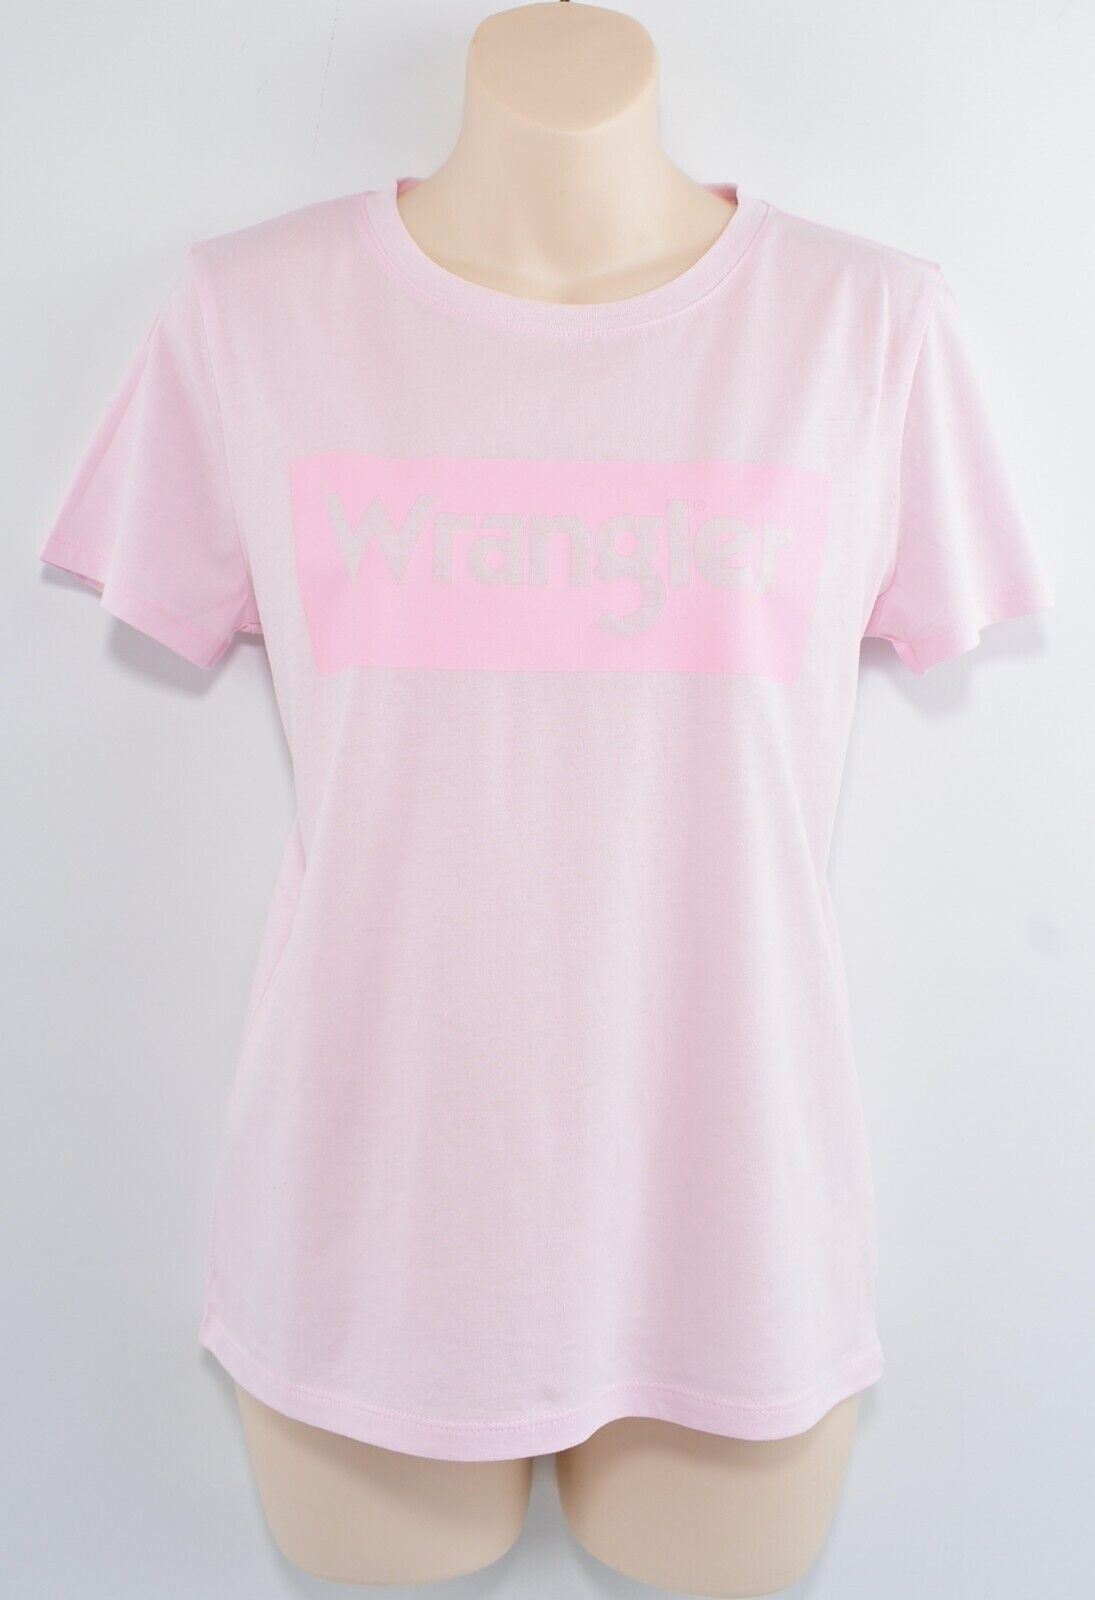 WRANGLER Women's Crew Neck Chest Logo T-shirt, Cradle Pink, size XS /UK 8